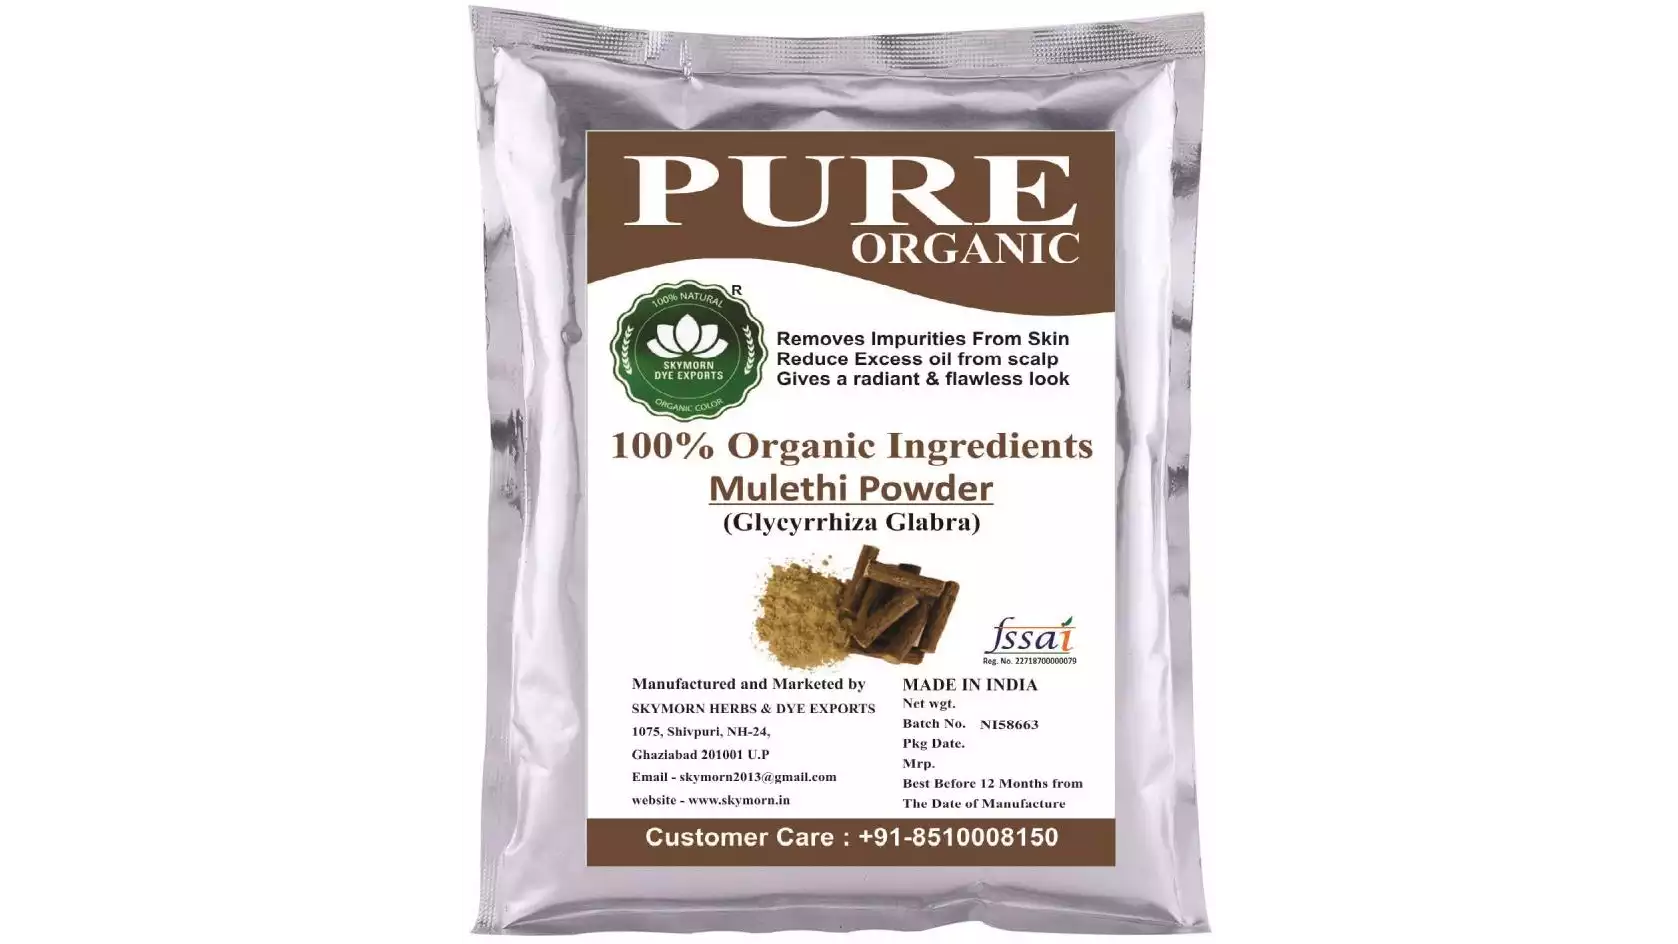 SkyMorn Pure Organic Mulathi (Licorice) Powder (400g)